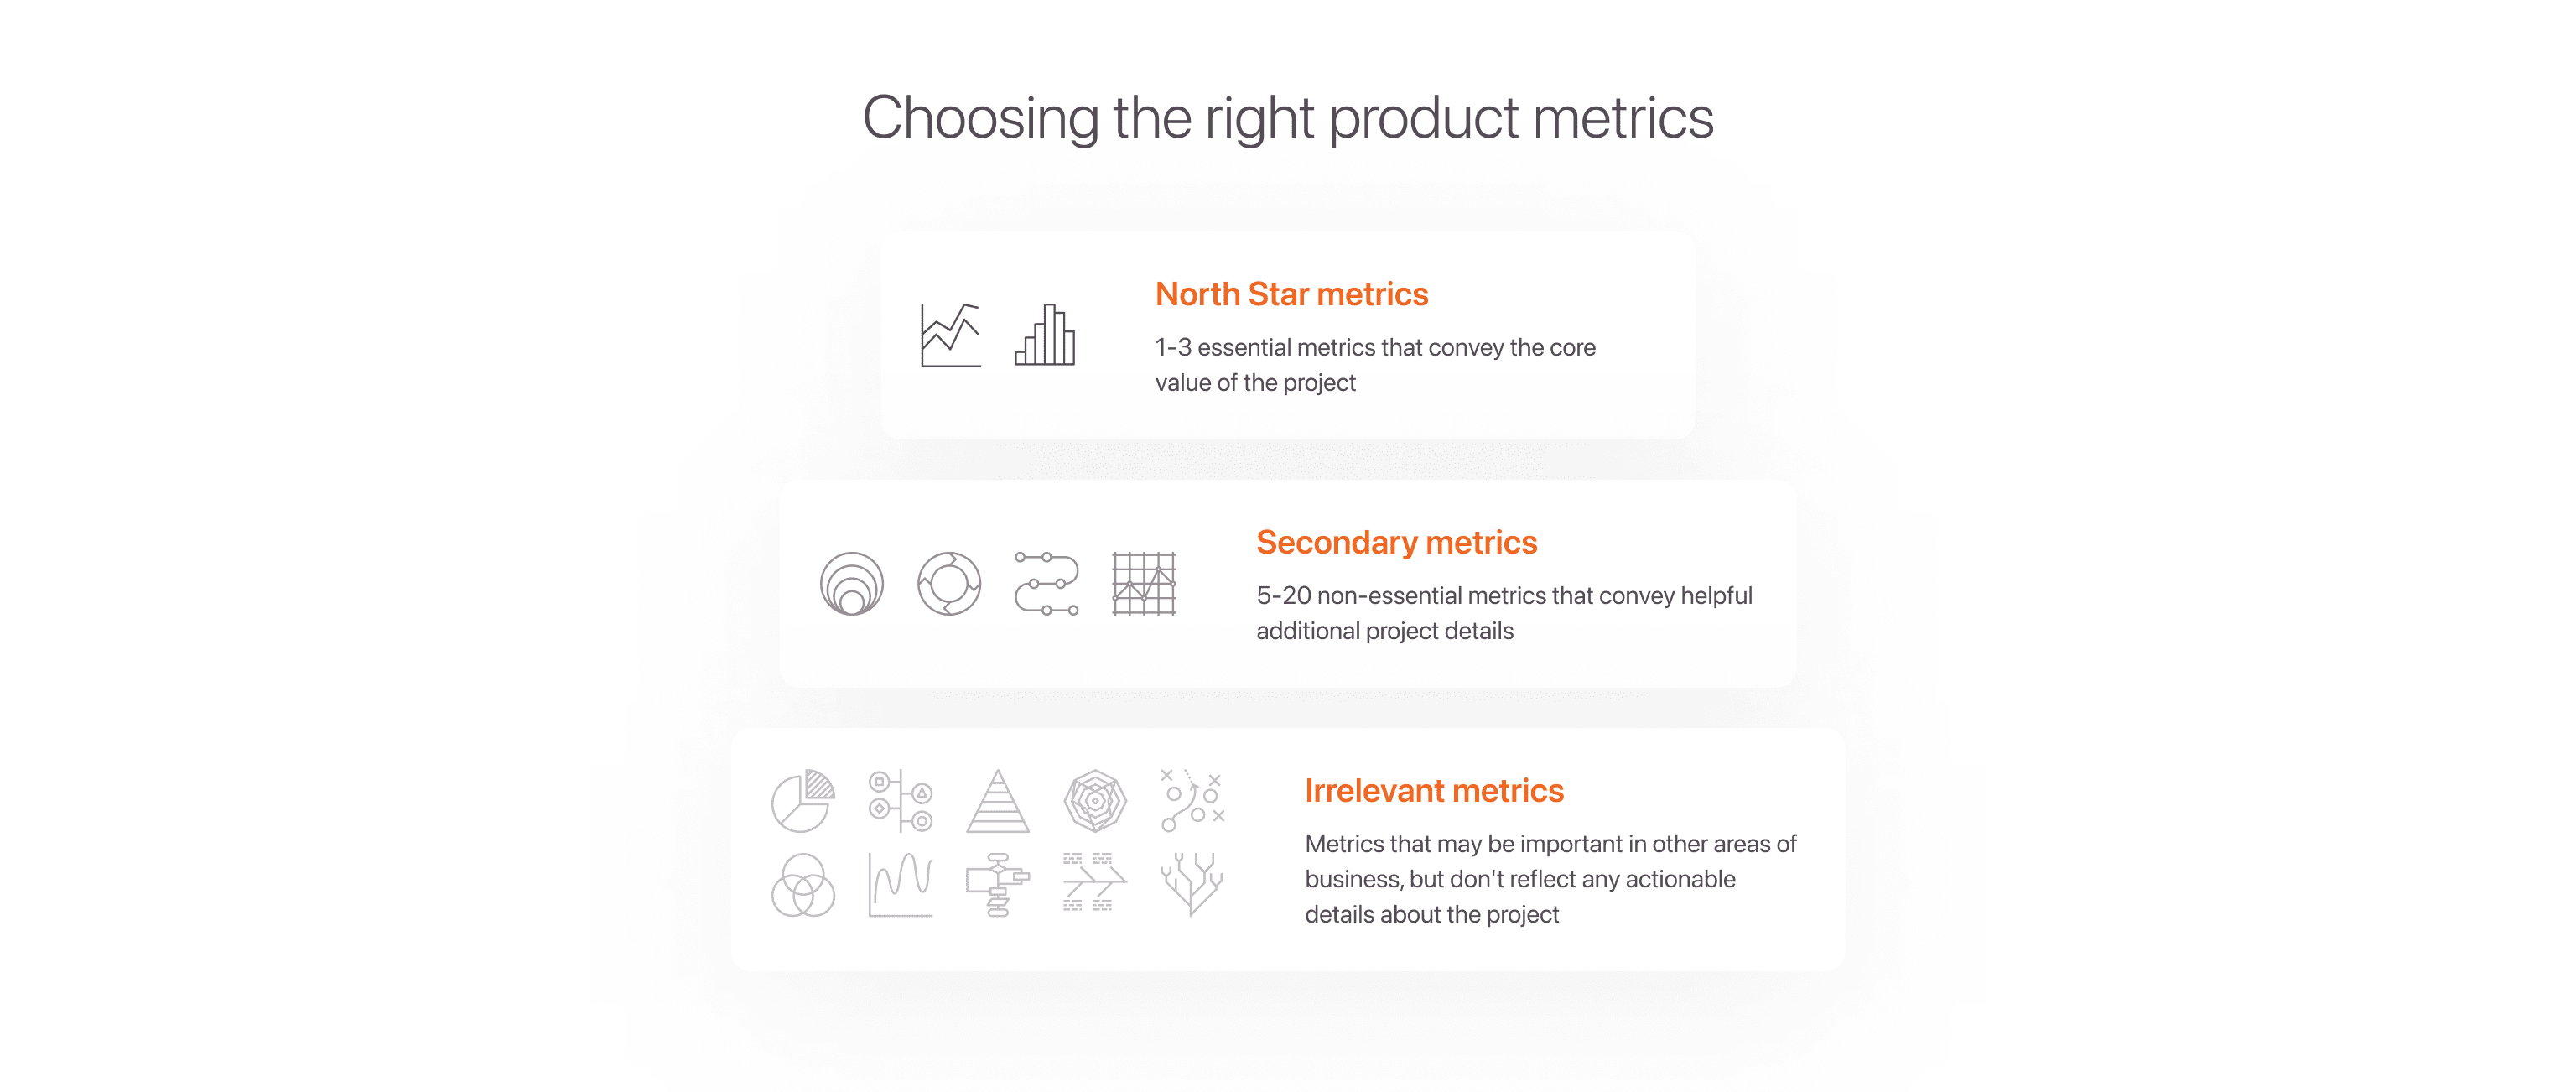 A graphic defining North Star metrics, secondary metrics, and irrelevant metrics